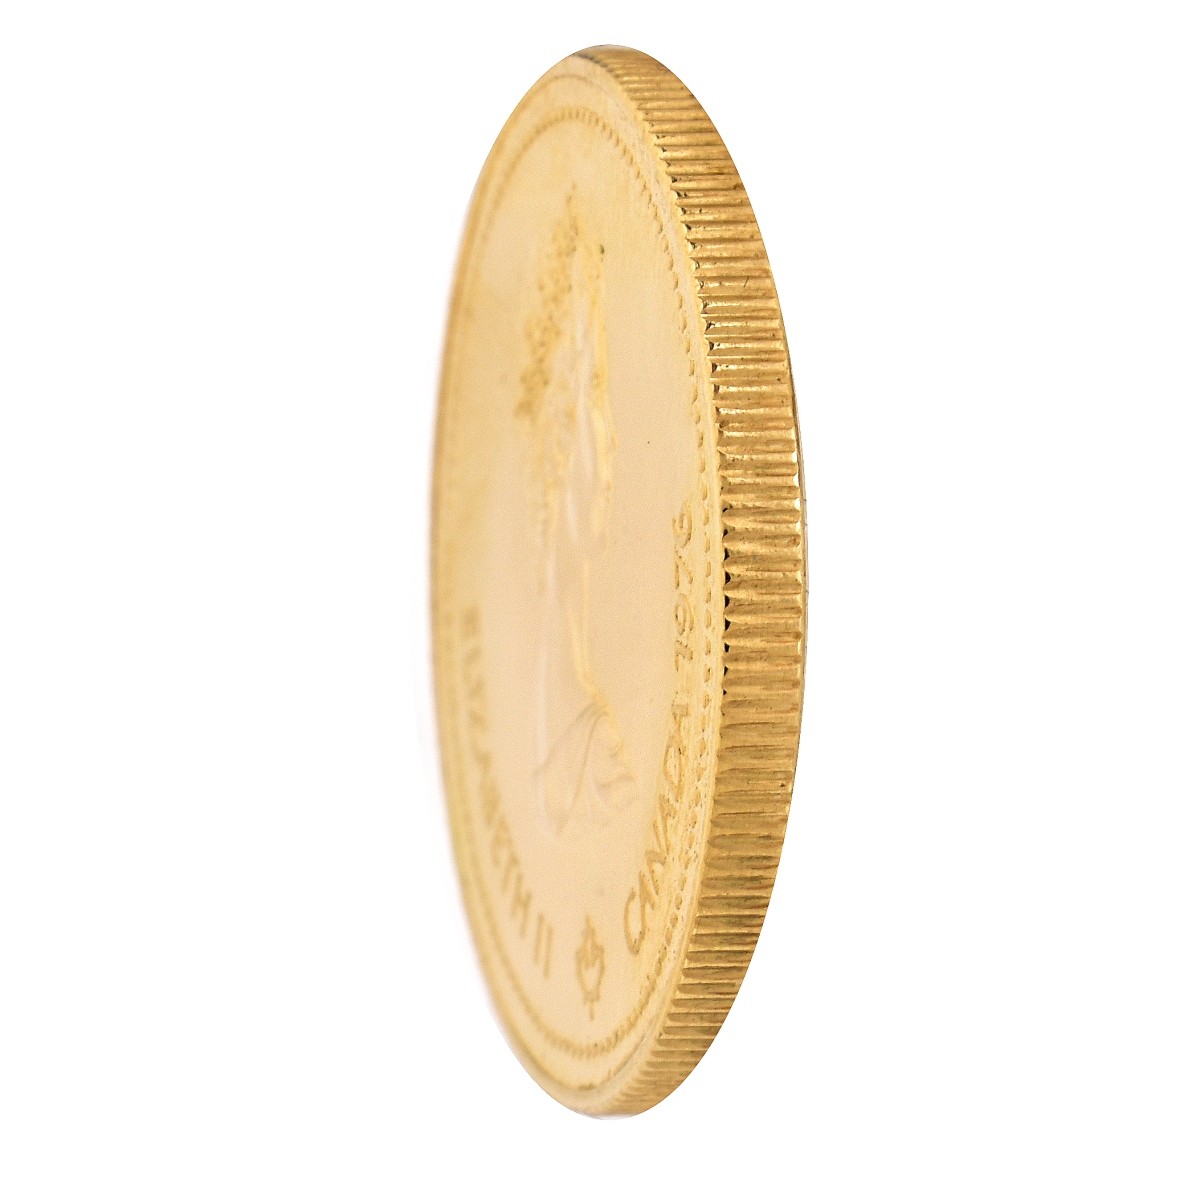 1976 Canadian Elizabeth II $100.00 Gold Coin